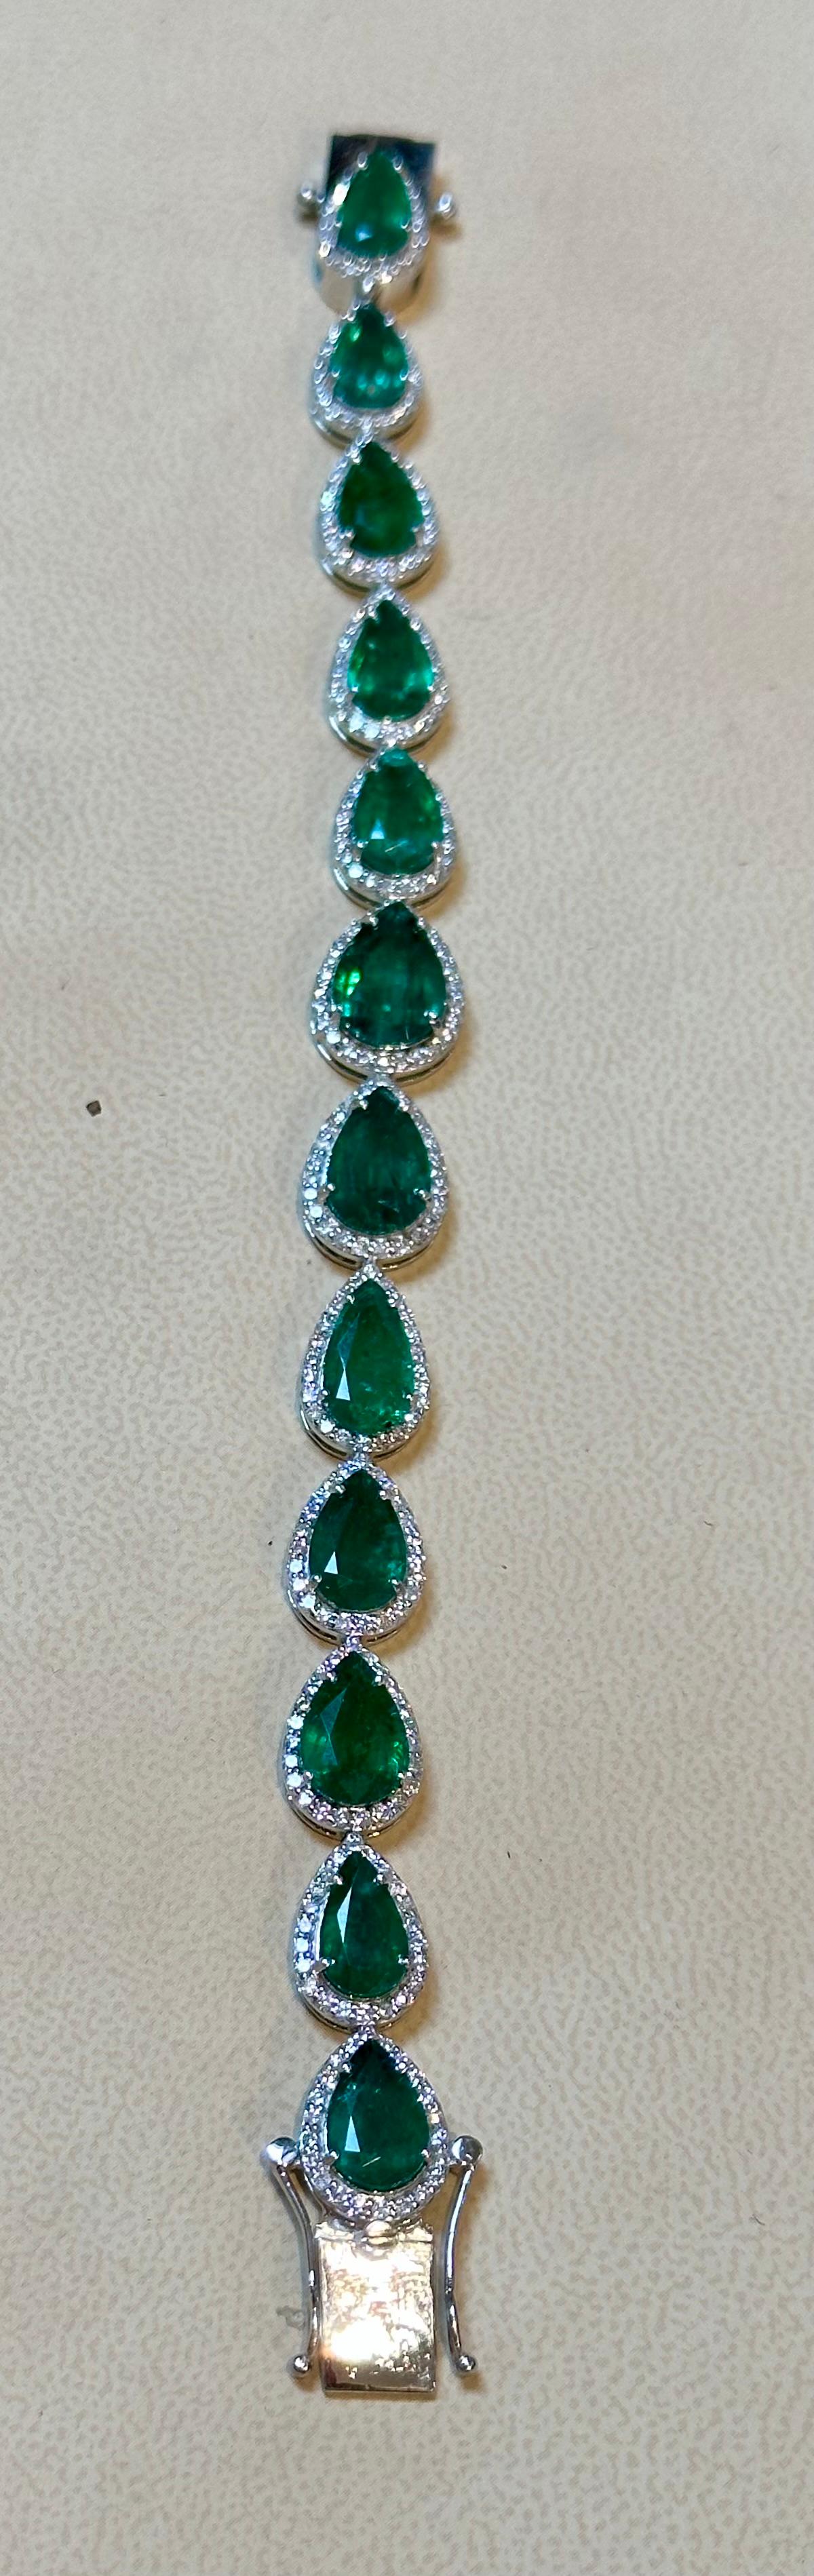 28 Carat Natural Zambian Emerald & Diamond Tennis Bracelet 14 Karat White Gold For Sale 11